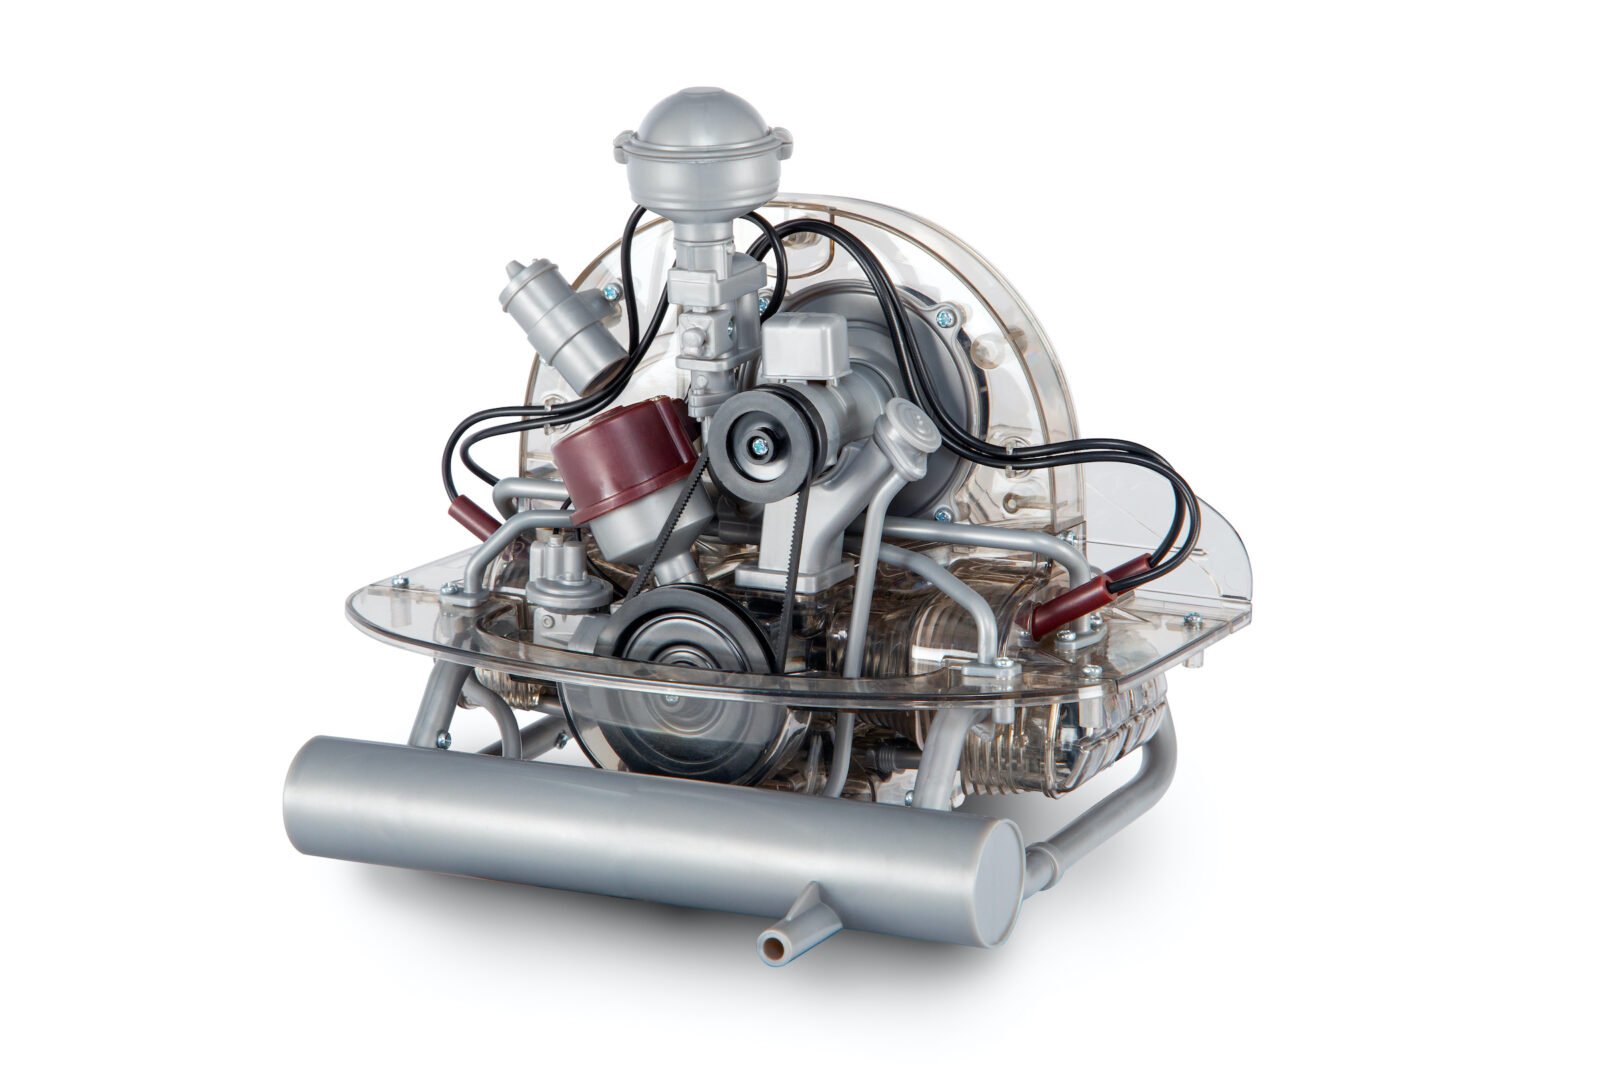 VW Beetle Flat-Four Boxer Engine Kit by Franzis Main